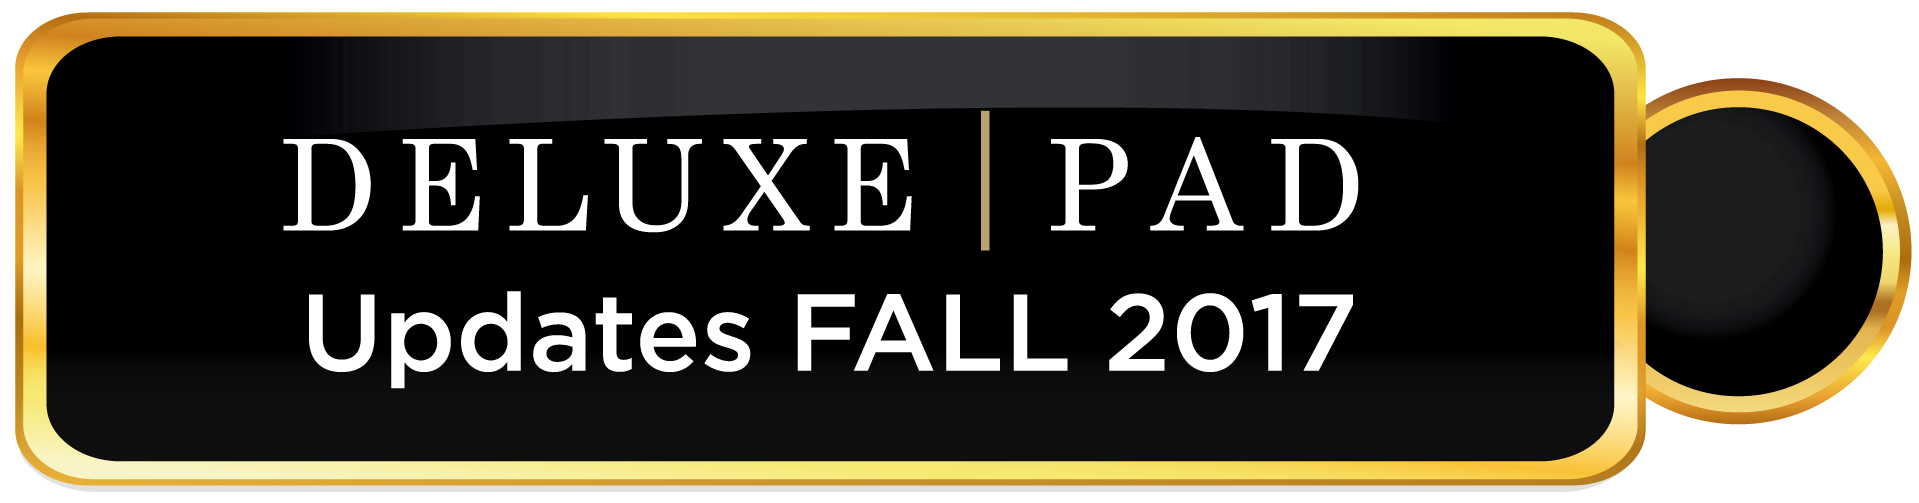 DeluxePad - Updates Fall 2017